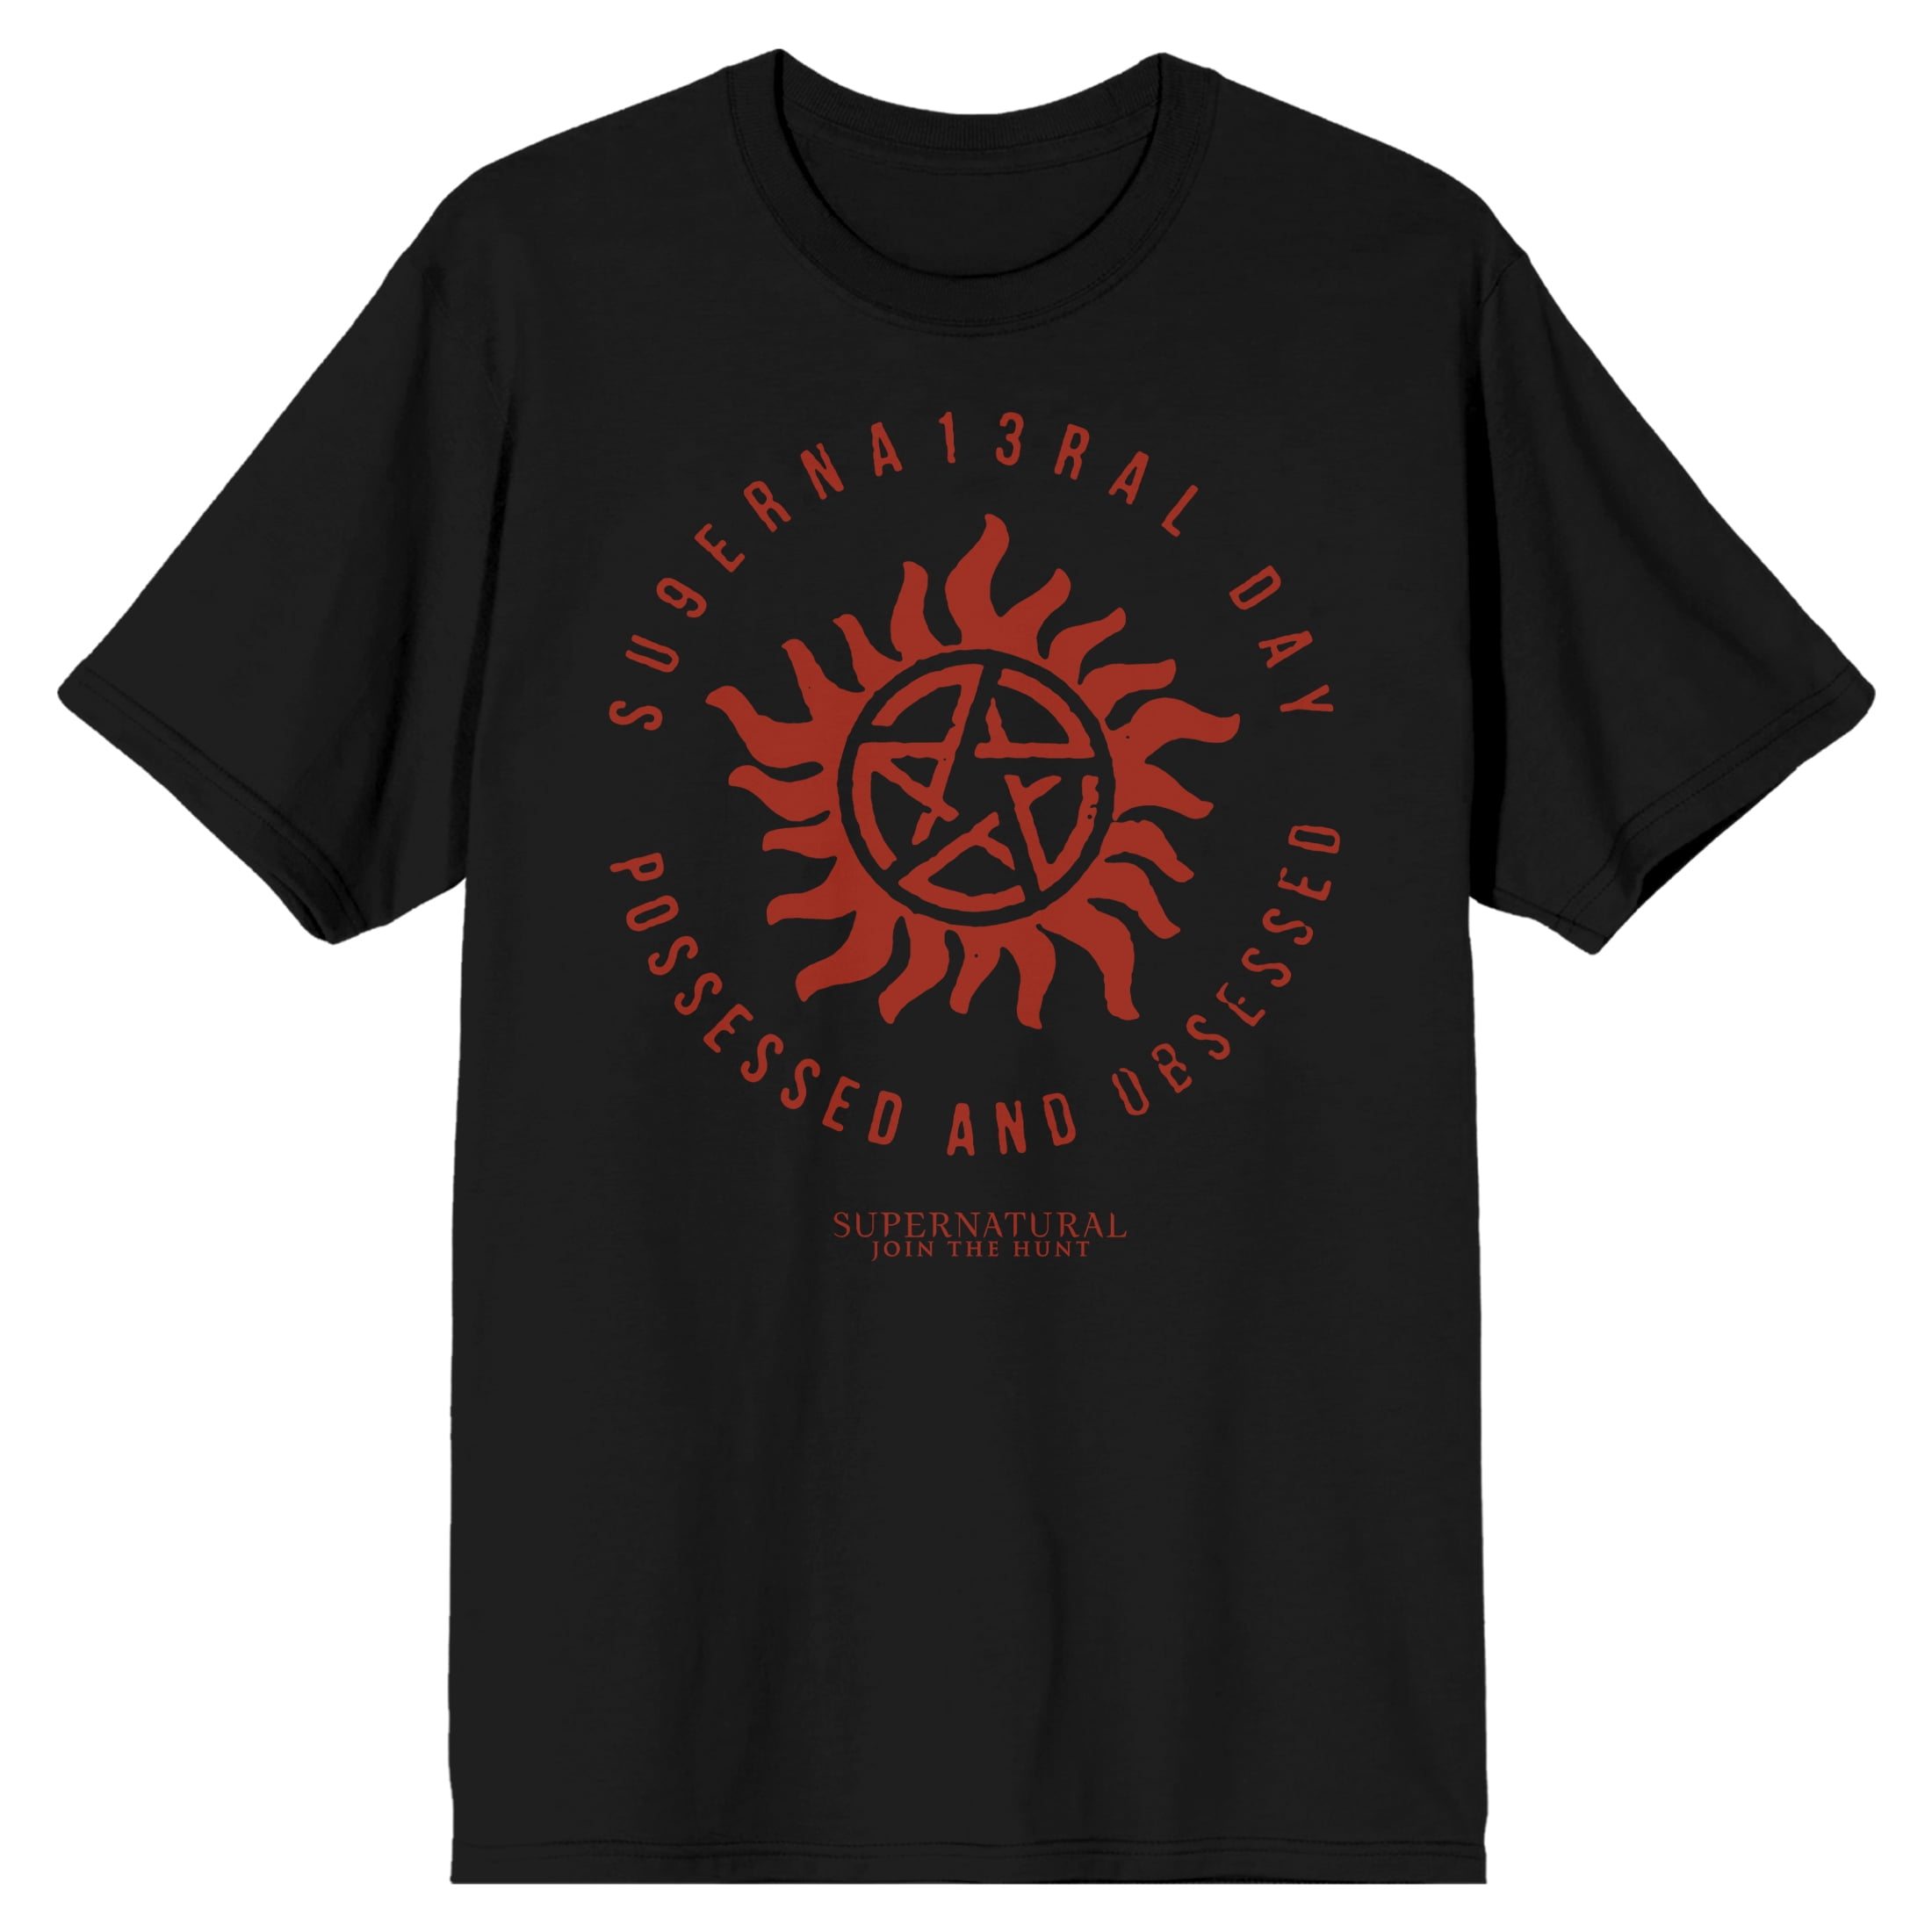 Supernatural Day 2019 T-Shirt